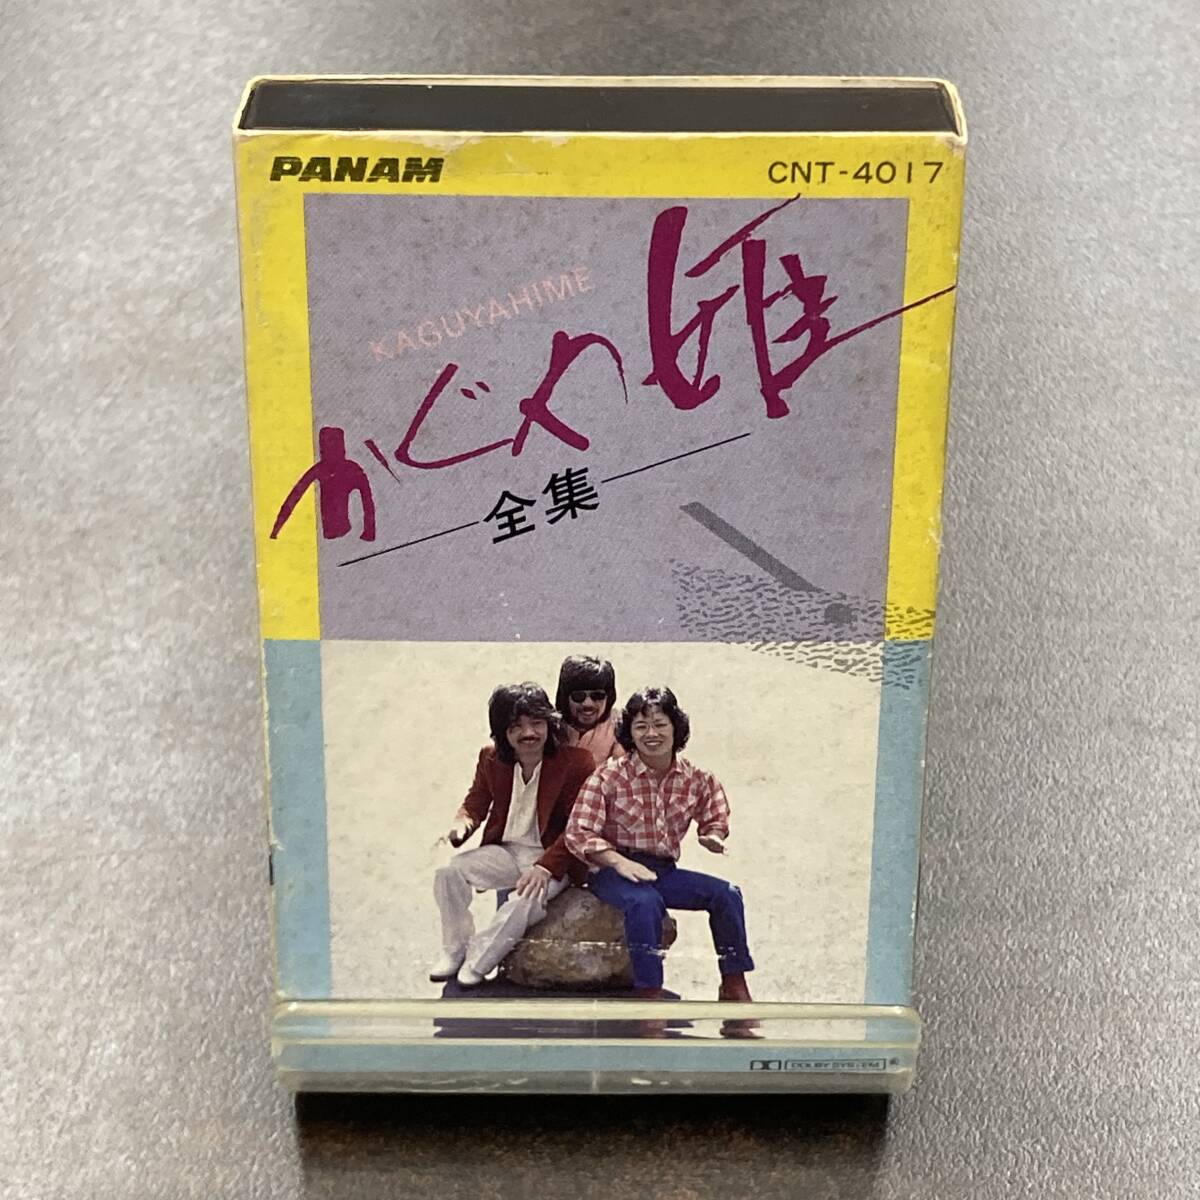 1176M かぐや姫 全集 カセットテープ / KAGUYAHIME Citypop Cassette Tapeの画像1